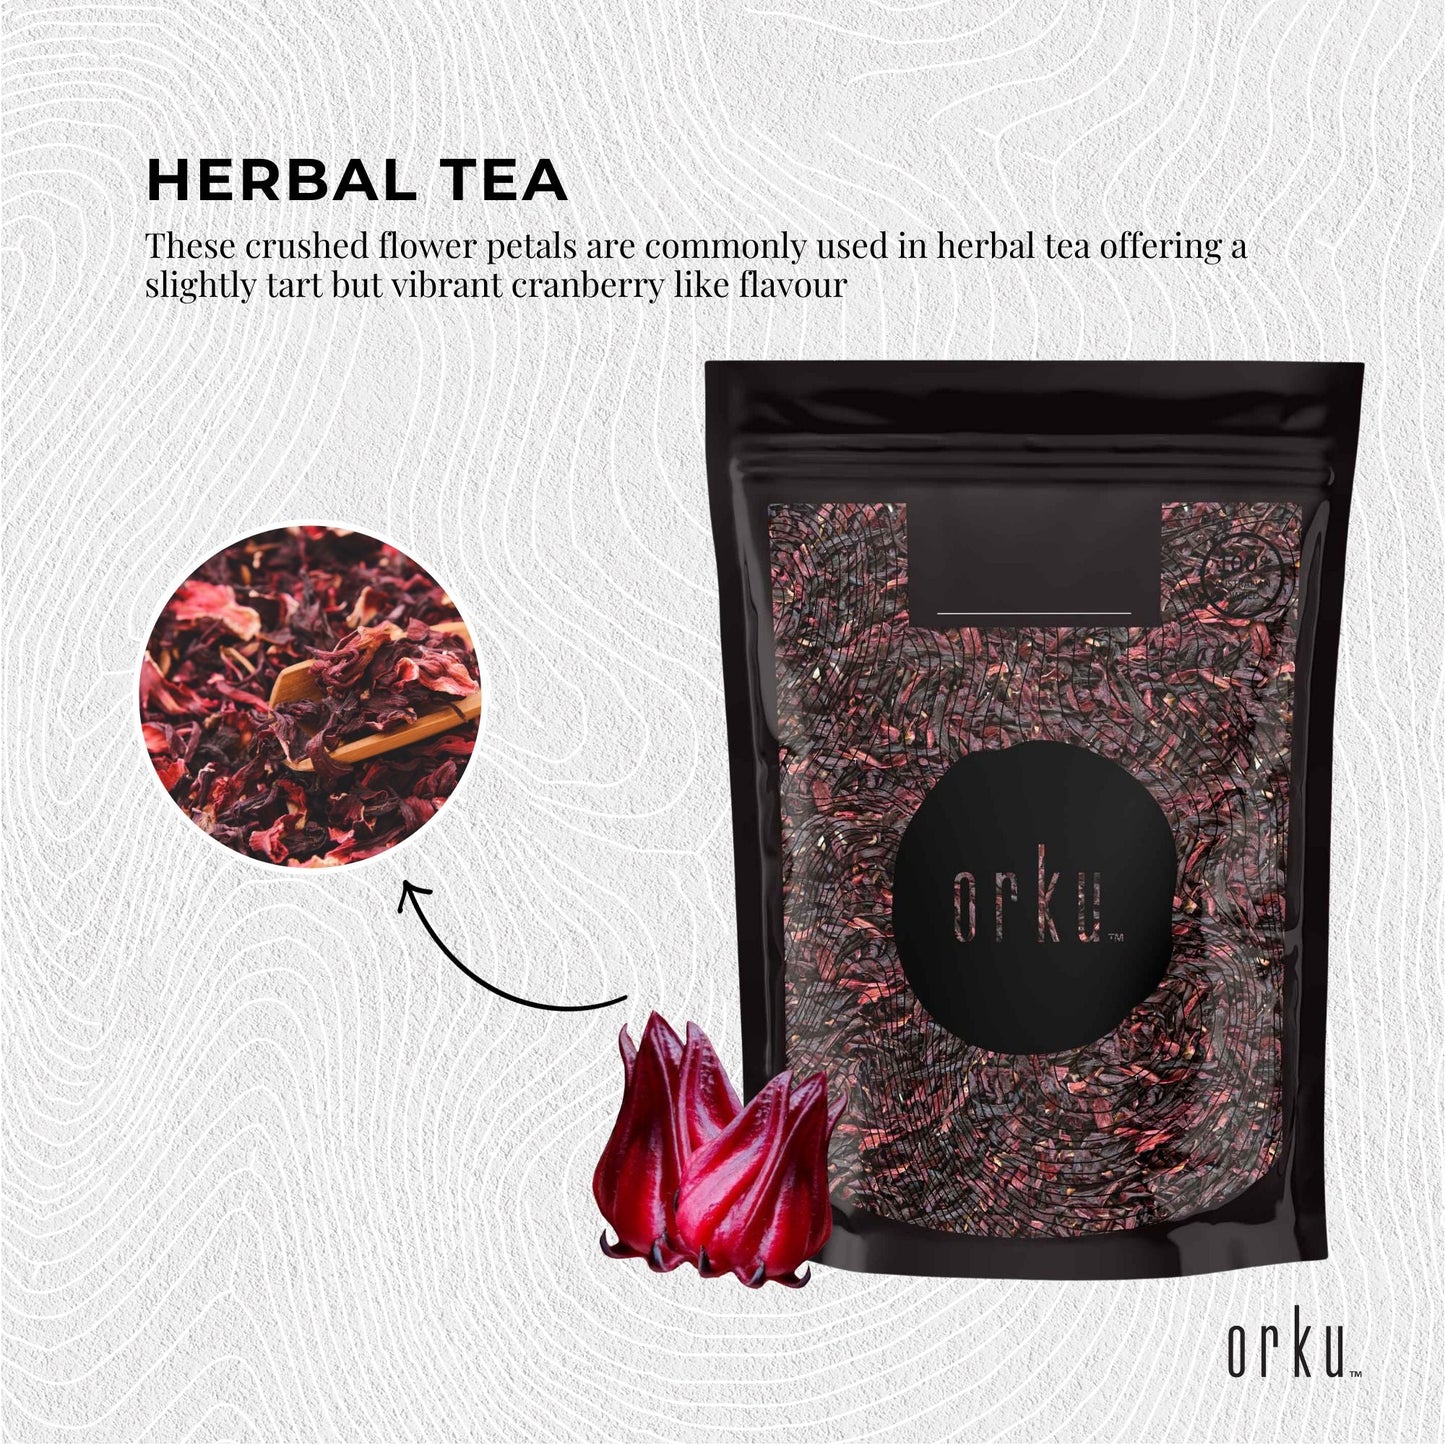 Organic Hibiscus Rosella Flower Crushed - Dried Herbal Tea Supplement